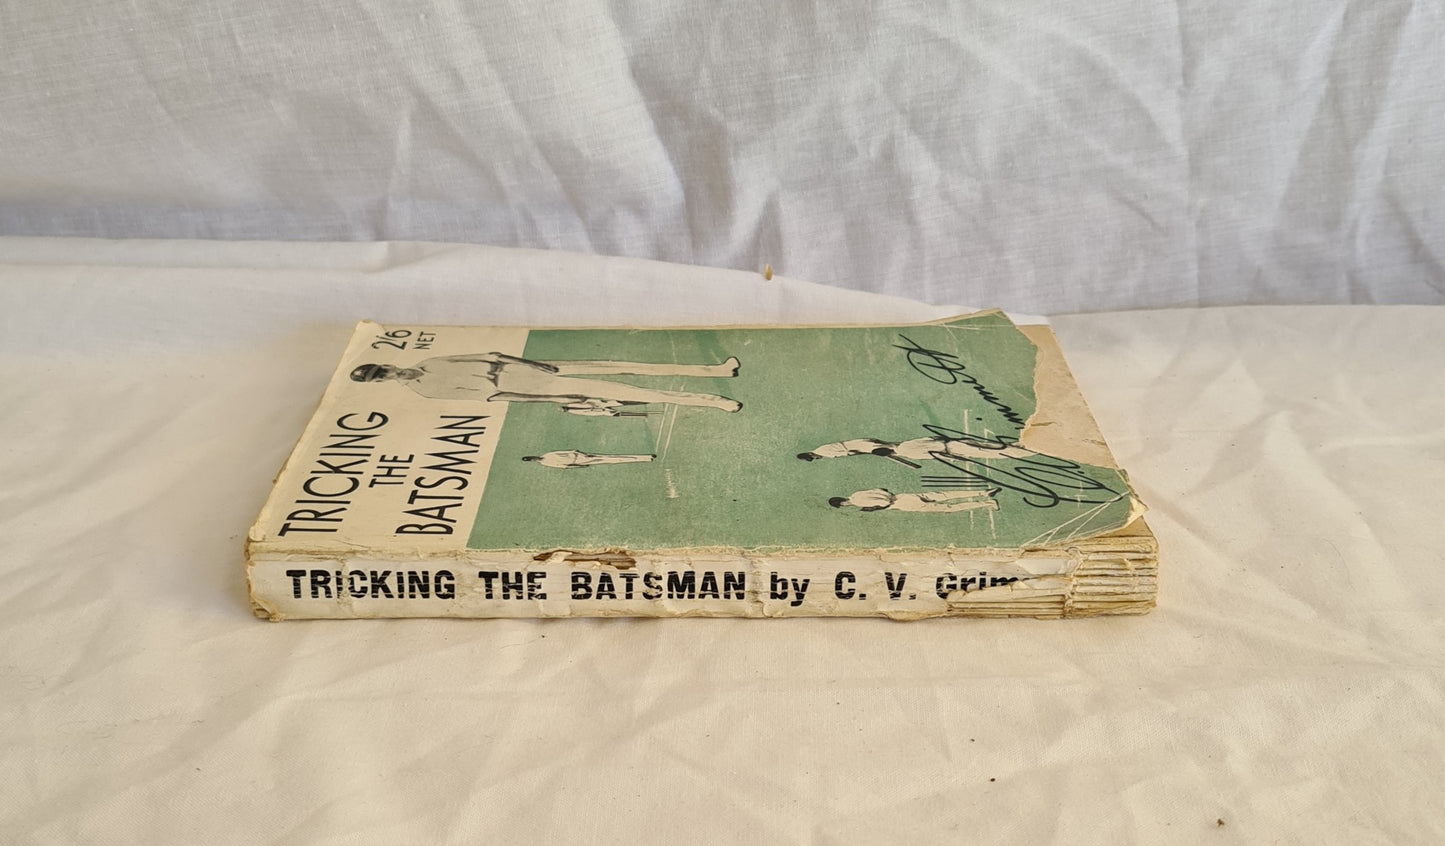 Tricking the Batsman by C. V. Grimmett